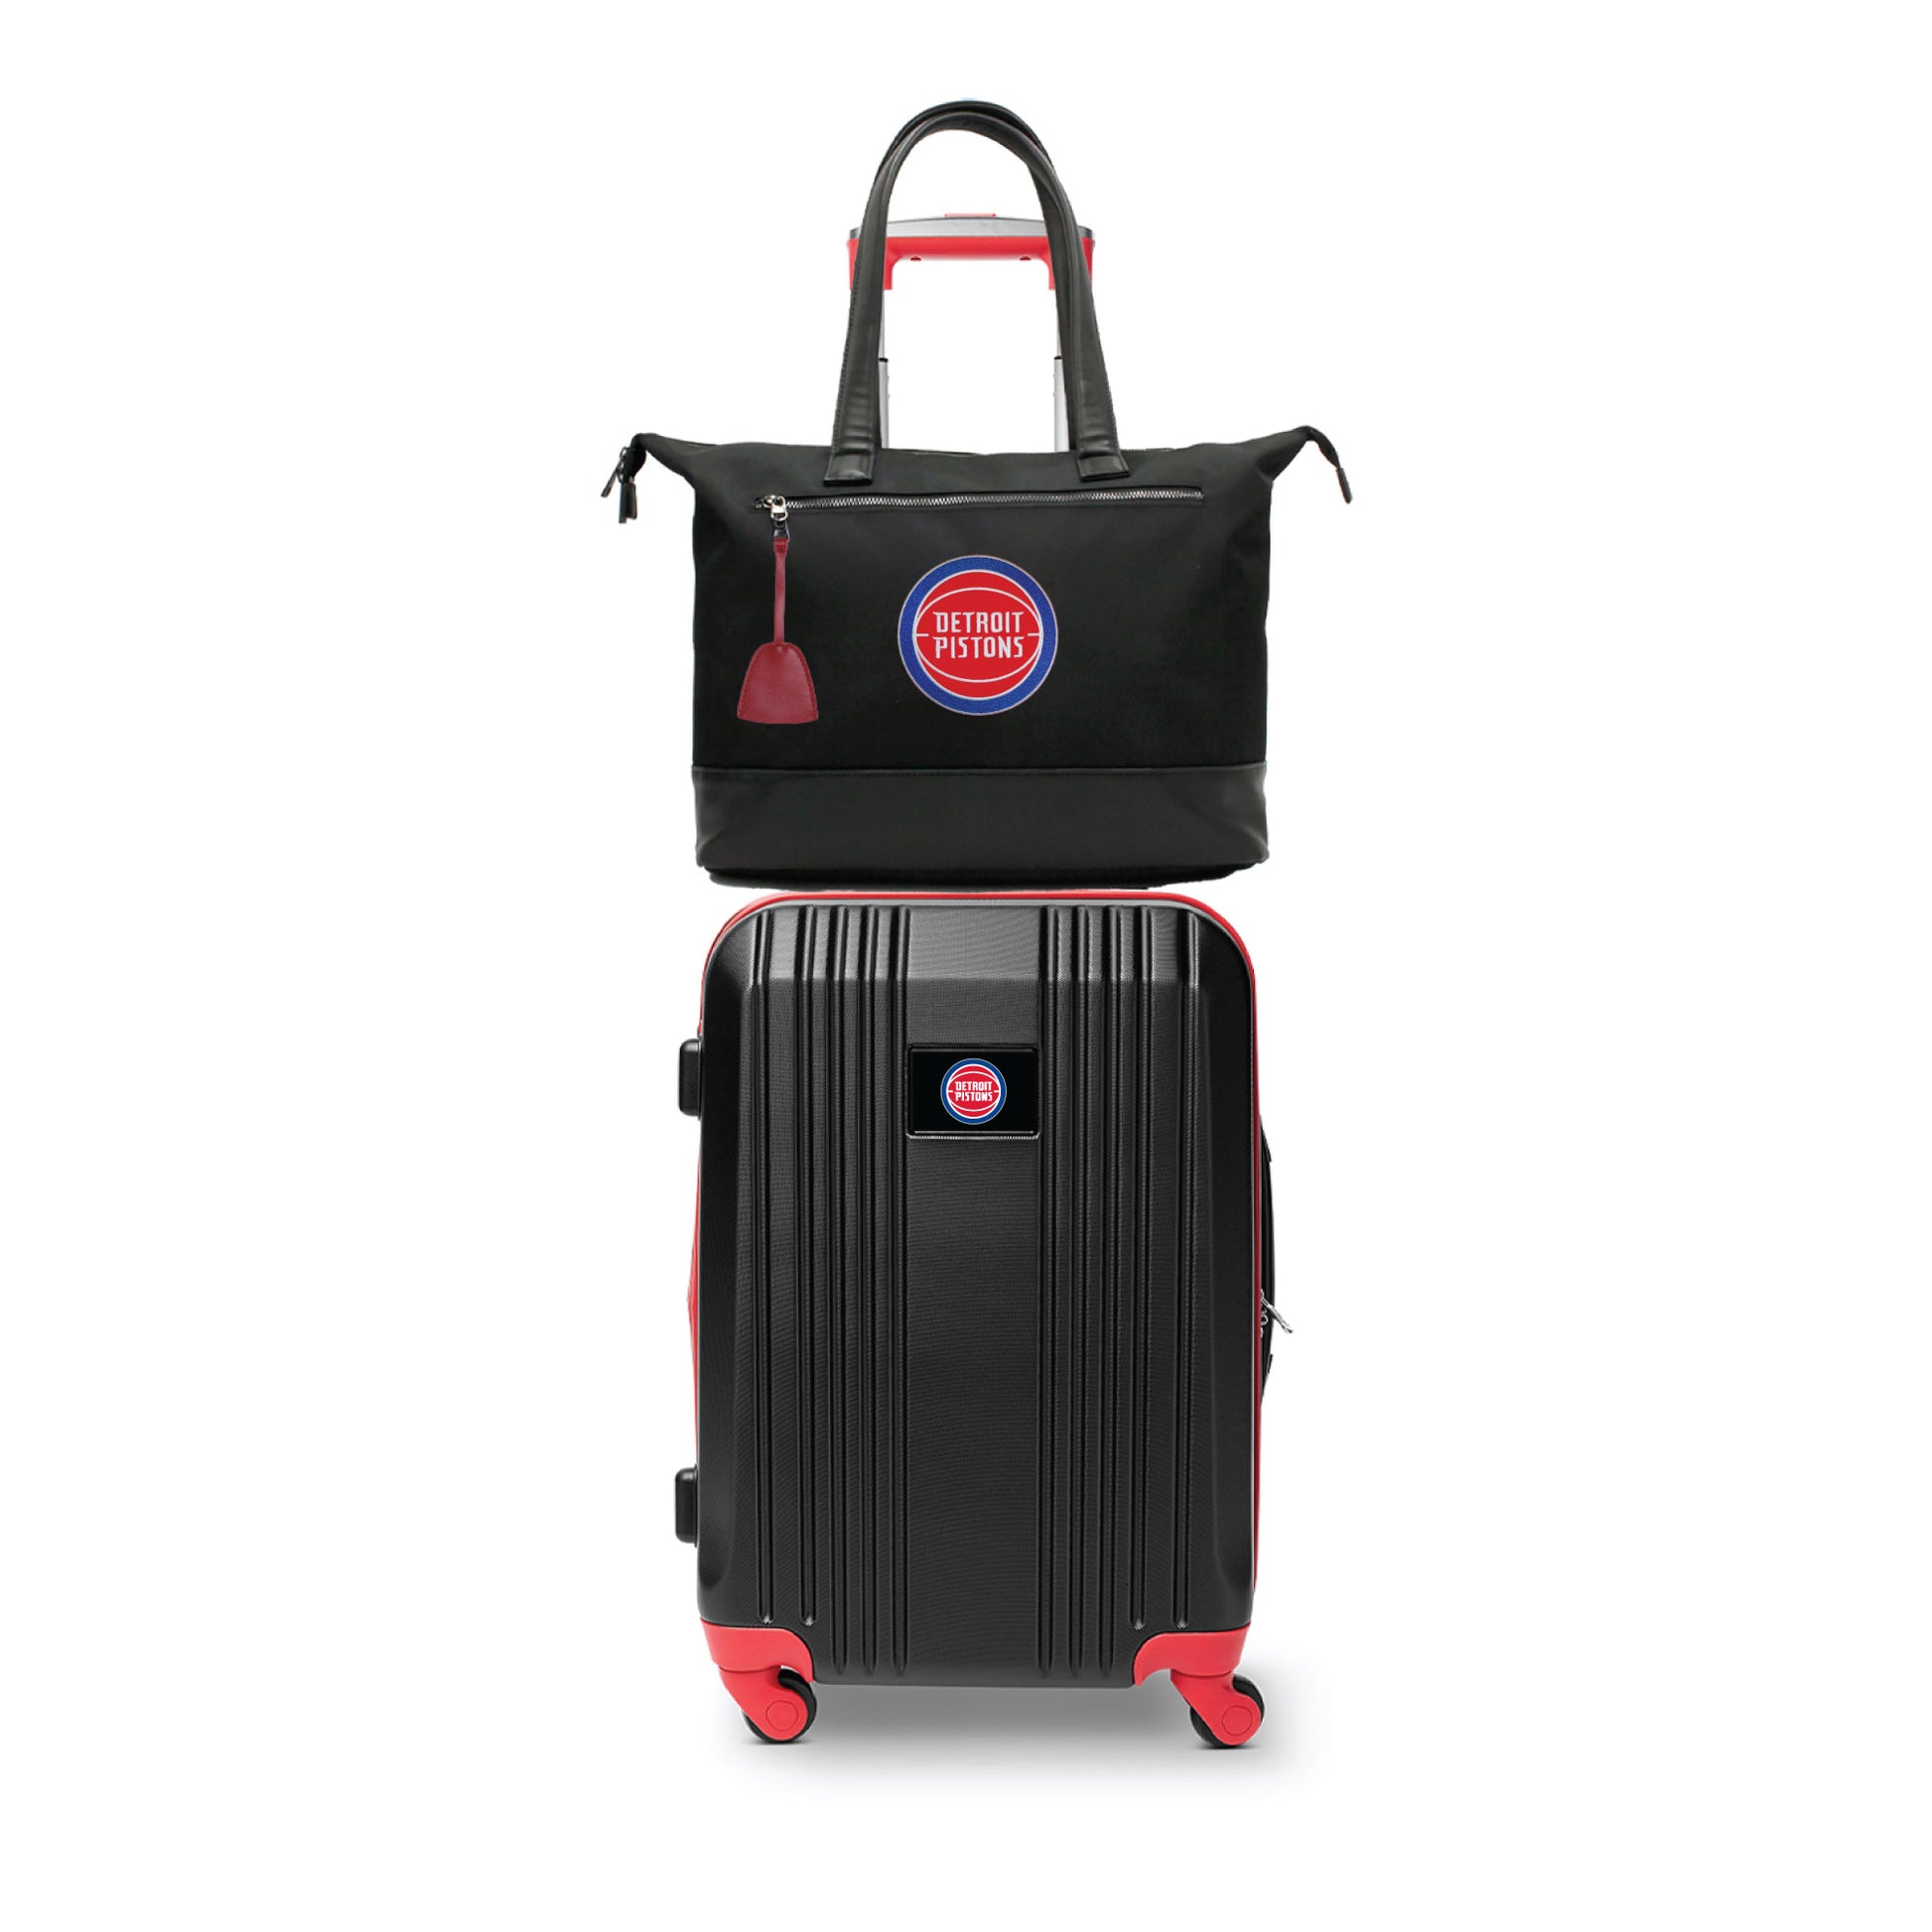 Detroit Pistons Premium Laptop Tote Bag and Luggage Set